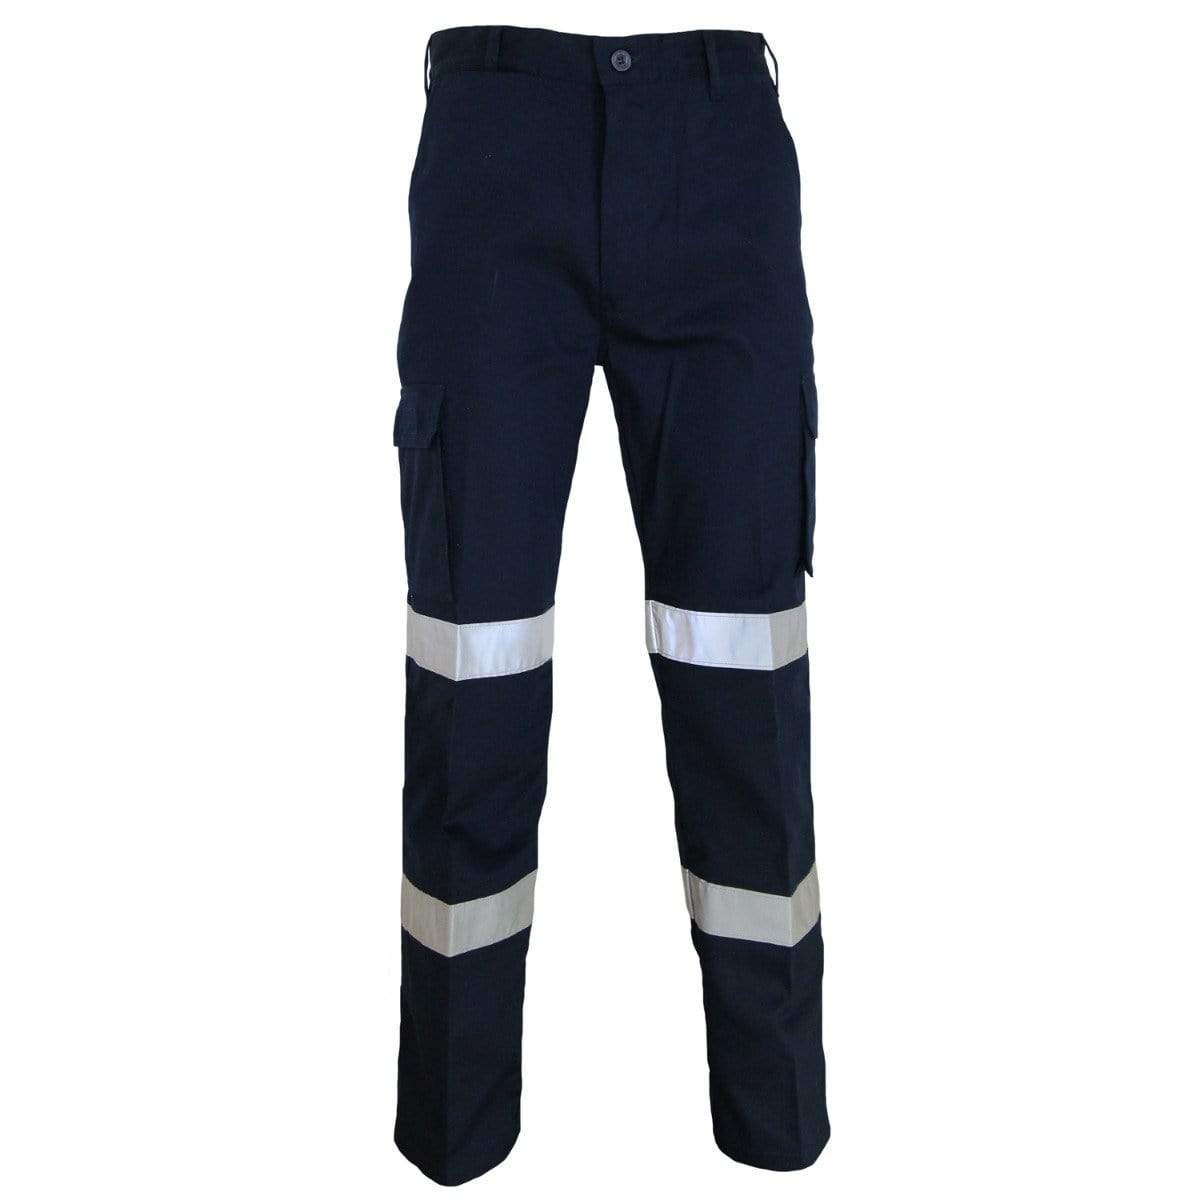 Dnc Workwear Lightweight Ctn Bio-motion Taped Pants - 3362 Work Wear DNC Workwear Navy 72R 